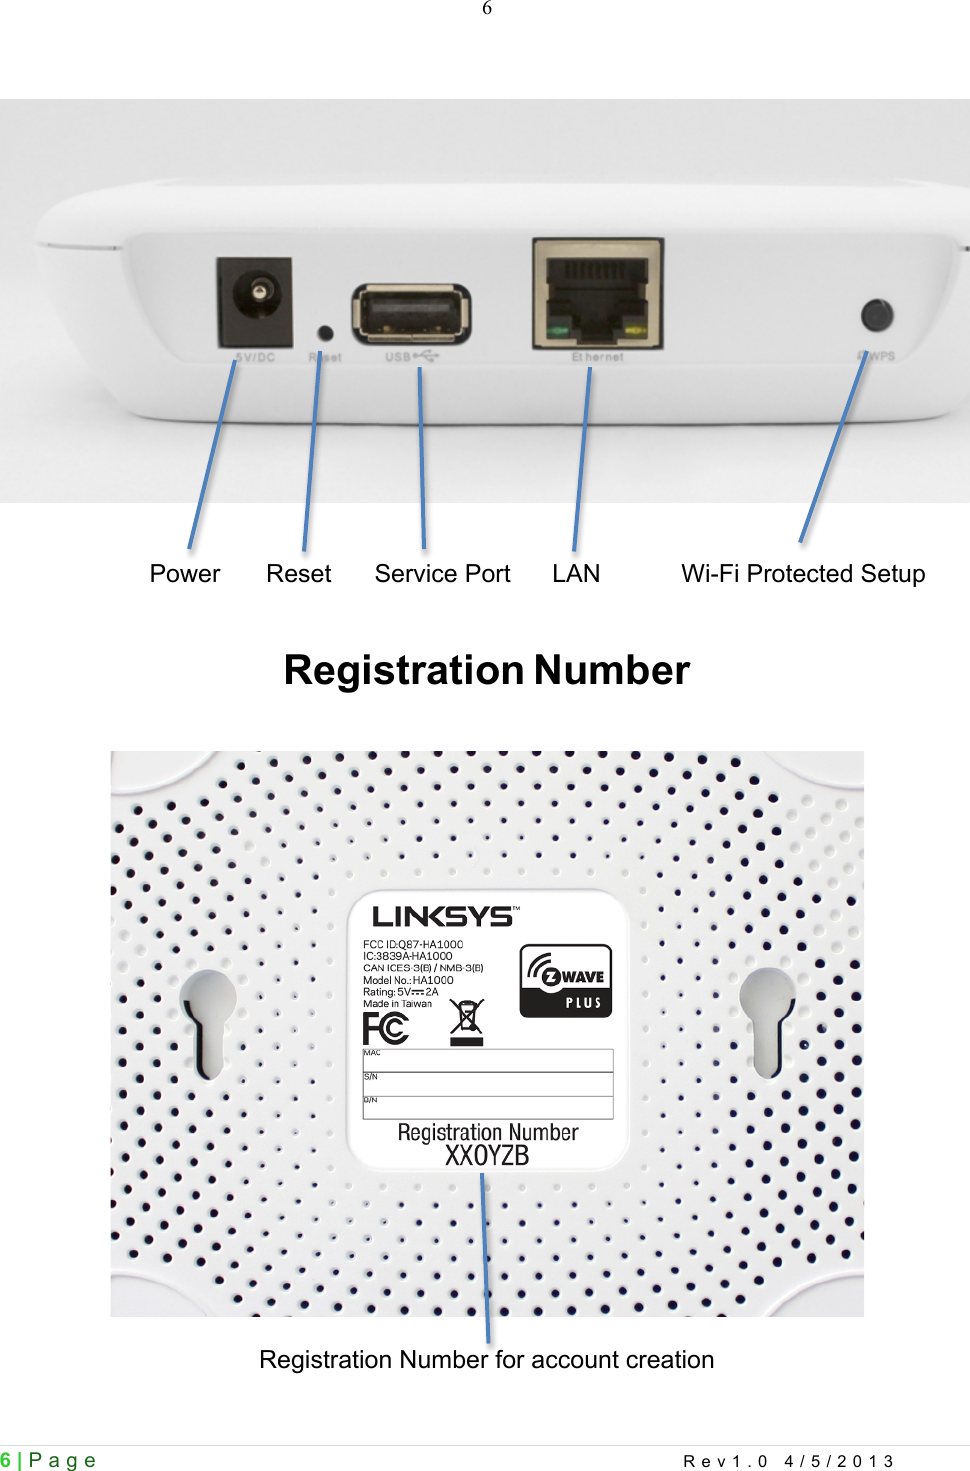  6 | Page    Rev1.0 4/5/2013  6     Power       Reset  Service Port      LAN   Wi-Fi Protected Setup     Registration Number     Registration Number for account creation  